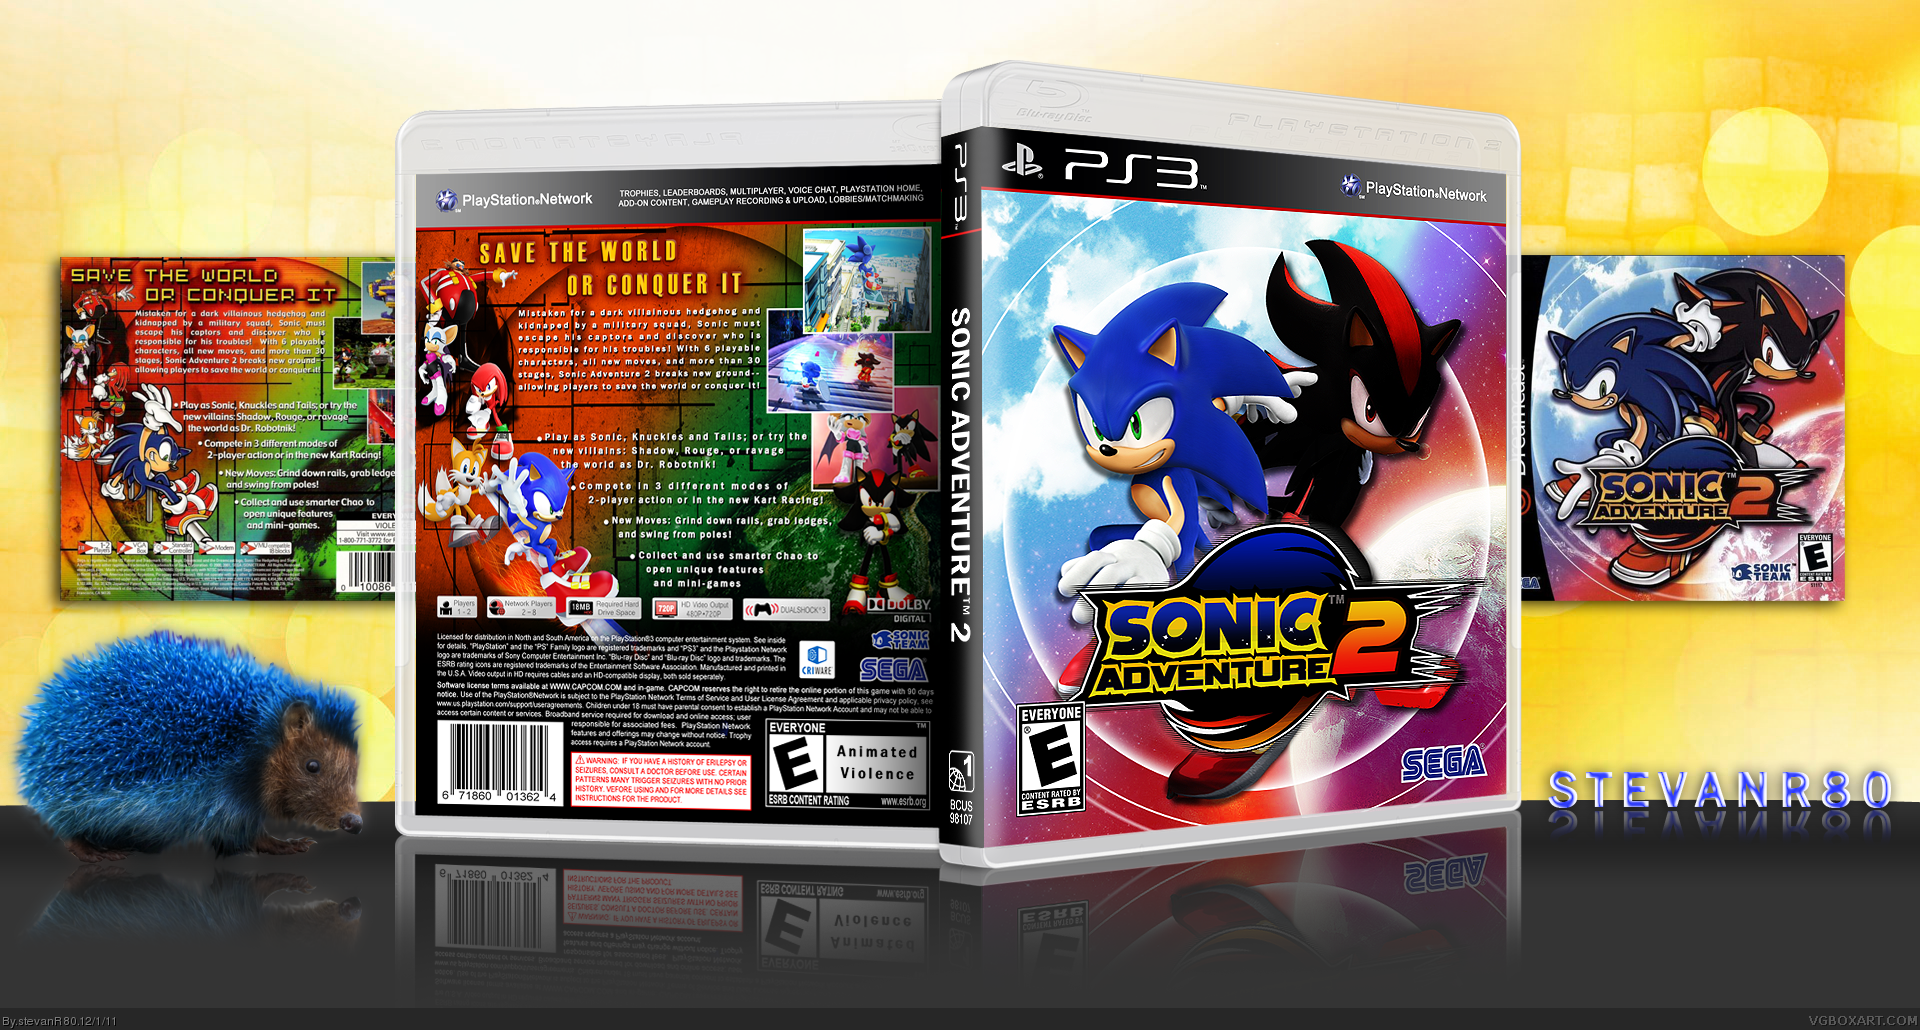 Диск на PLAYSTATION 3 Sonic. Sonic Adventure 2 диск. Диск на сони плейстейшен 3 Соник. Sonic Adventure 2 ps3.